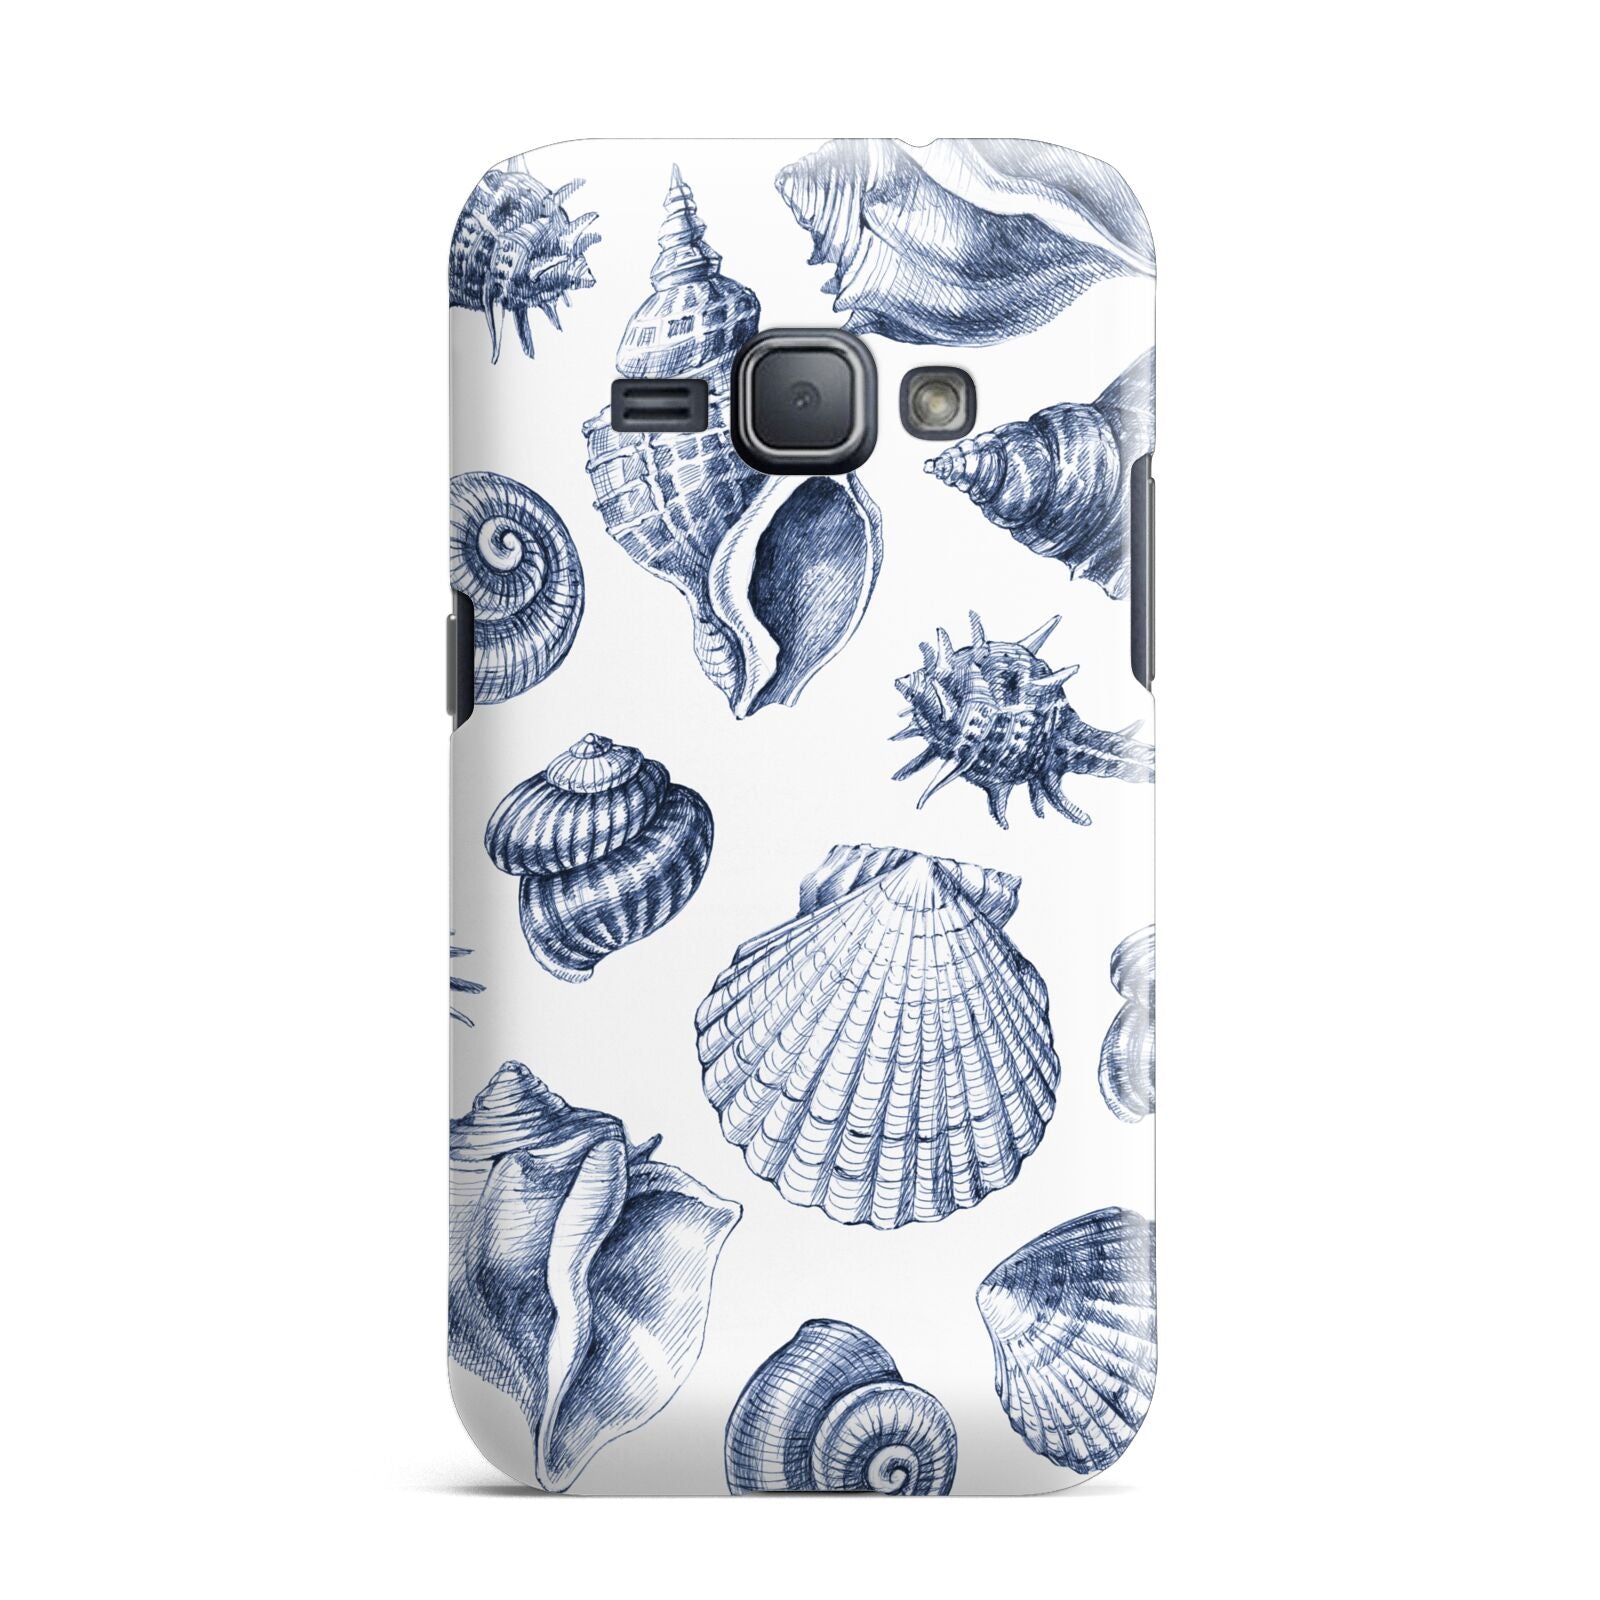 Shell Samsung Galaxy J1 2016 Case